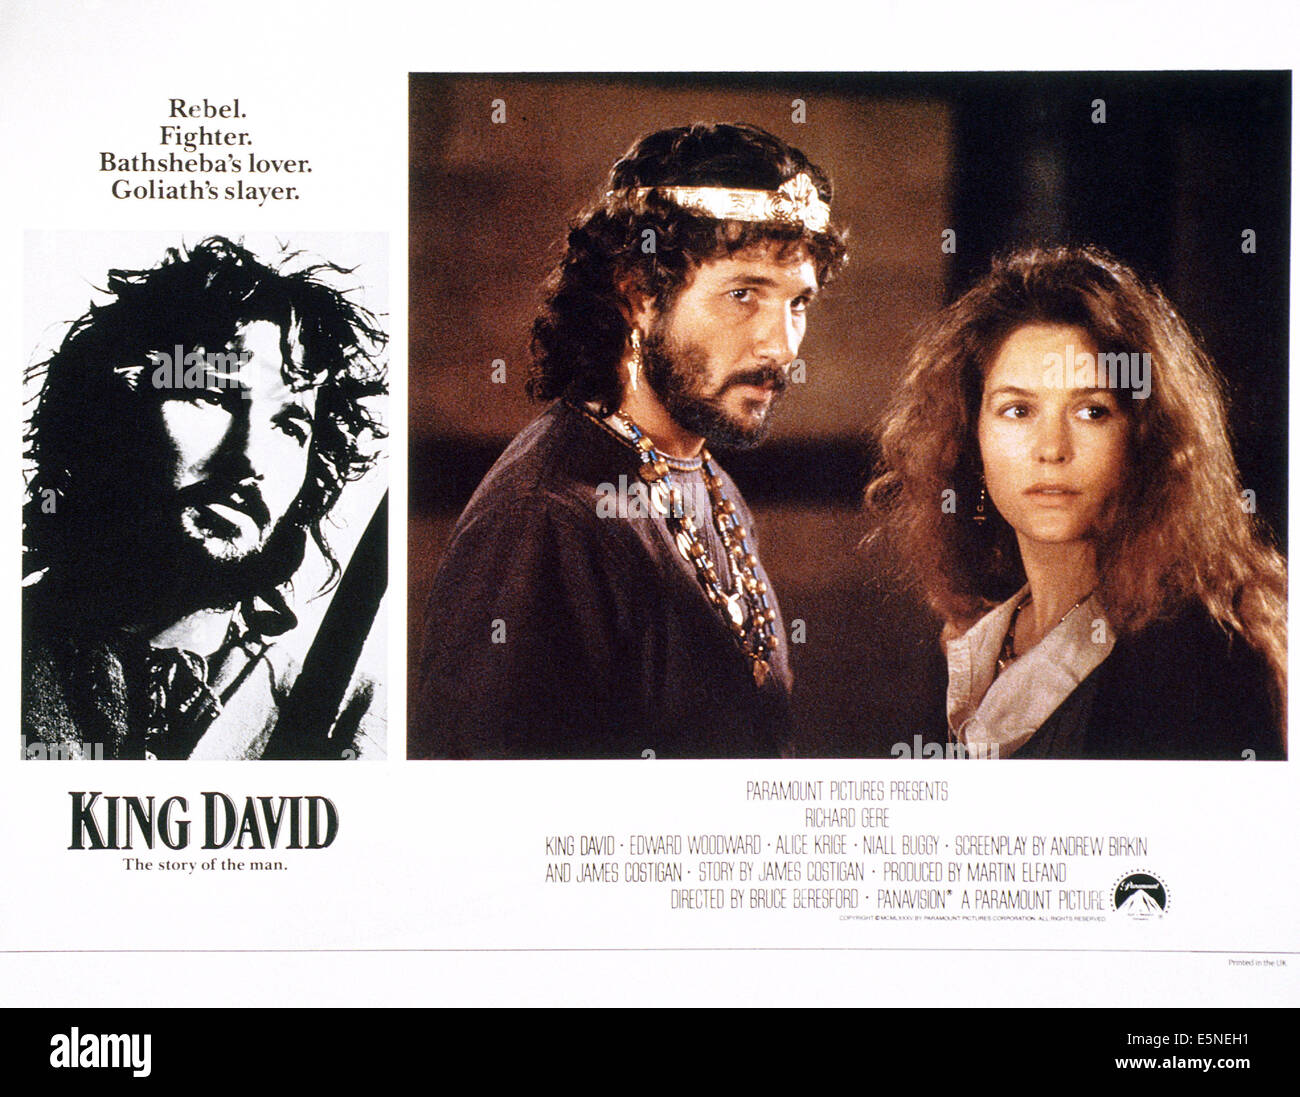 König DAVID, von links: Richard Gere als König David, Alice Krige als Bathsheba, 1985, © Paramount/Courtesy Everett Collection Stockfoto